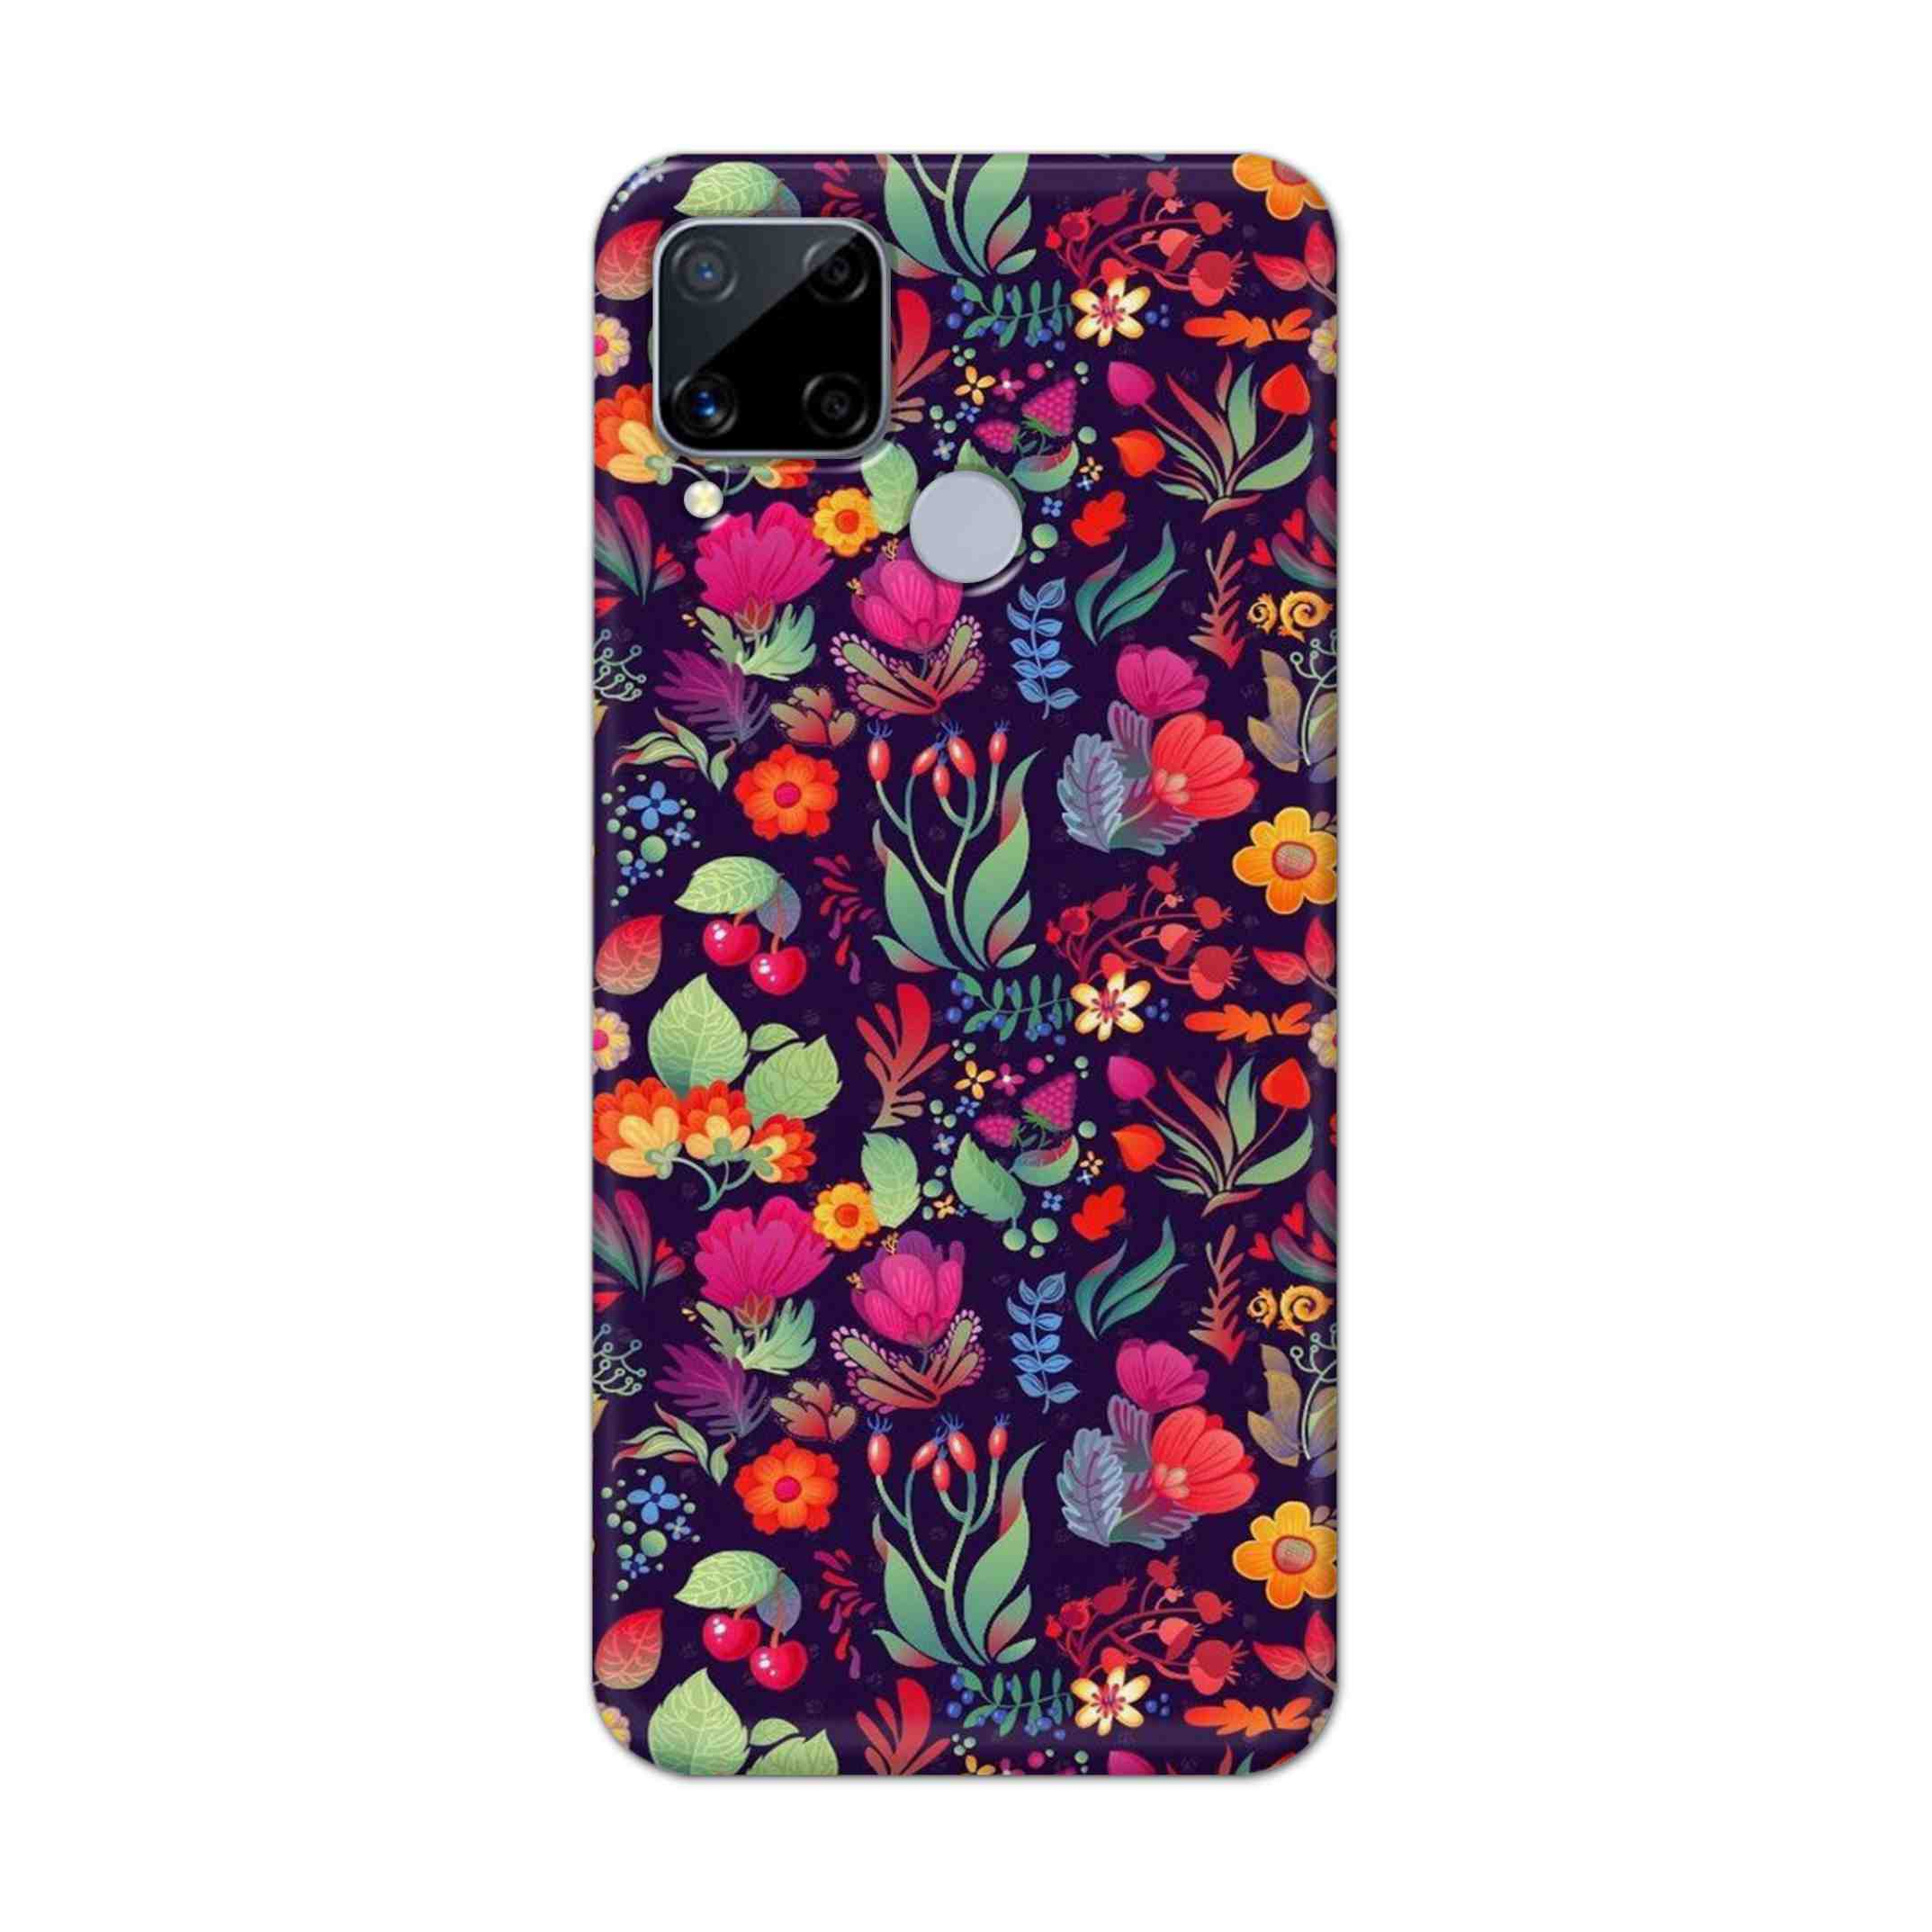 Buy Fruits Flower Hard Back Mobile Phone Case Cover For Realme C15 Online